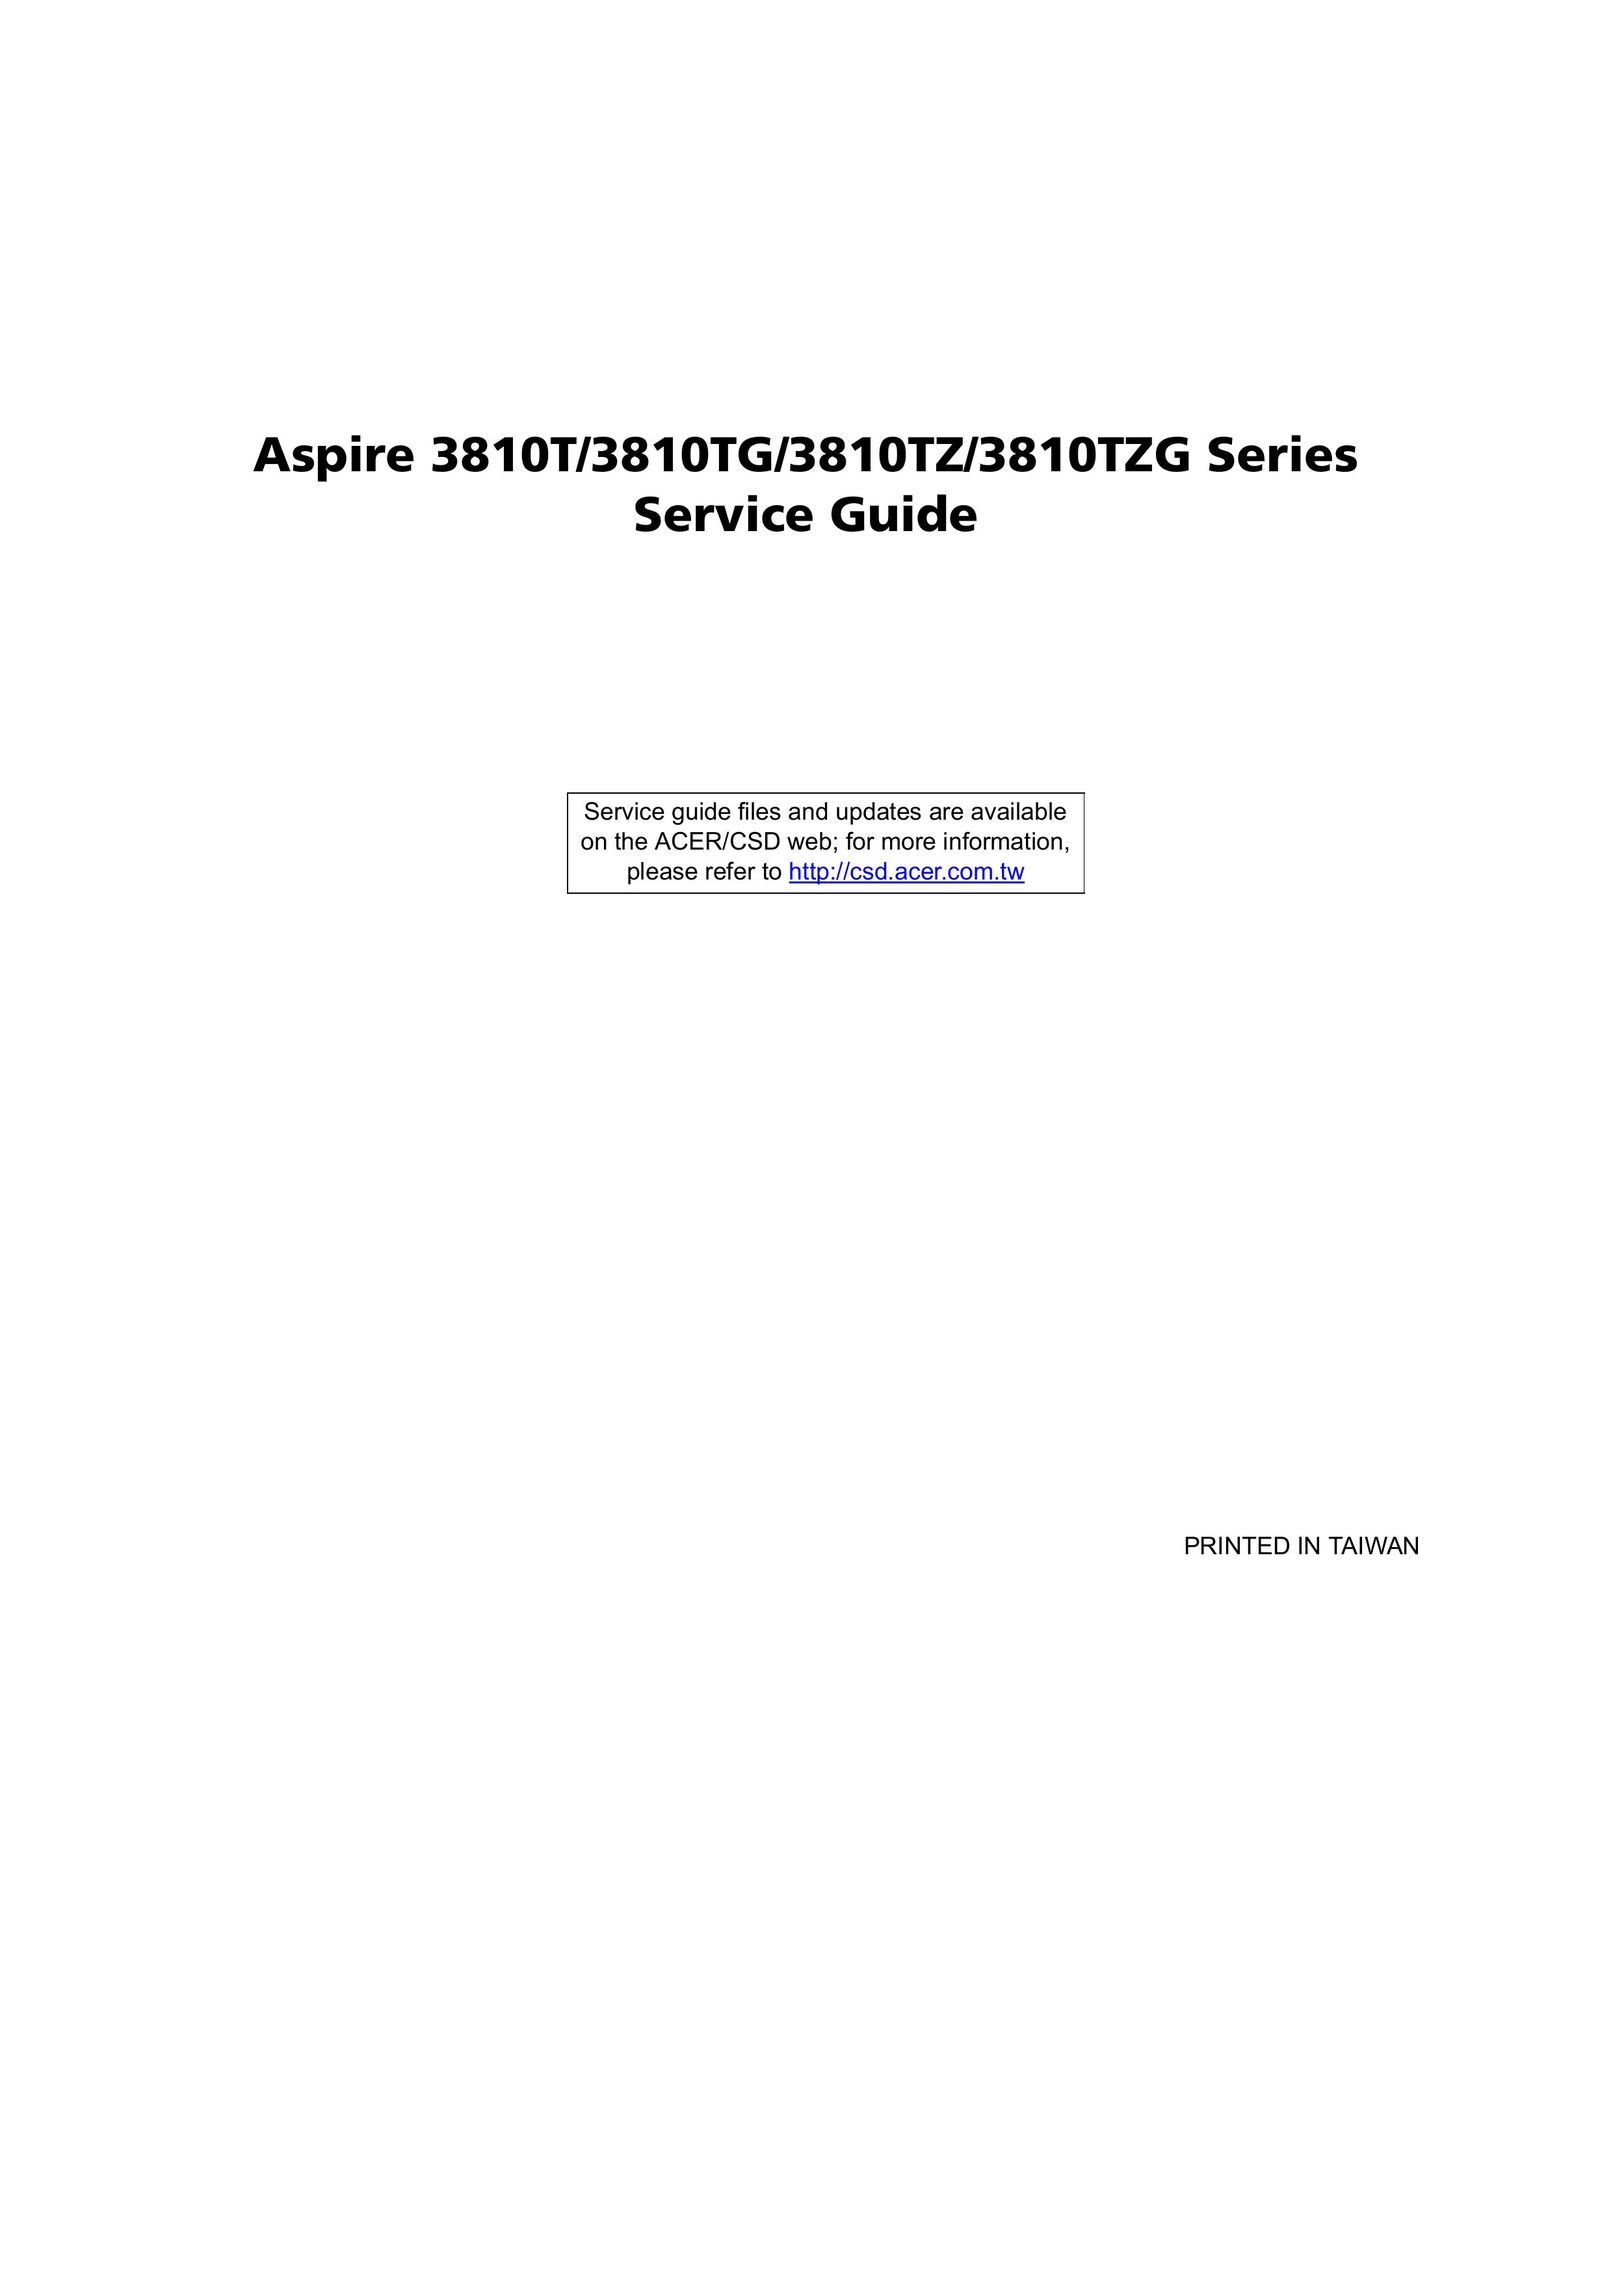 Aspire Digital 3810TZG Personal Computer User Manual